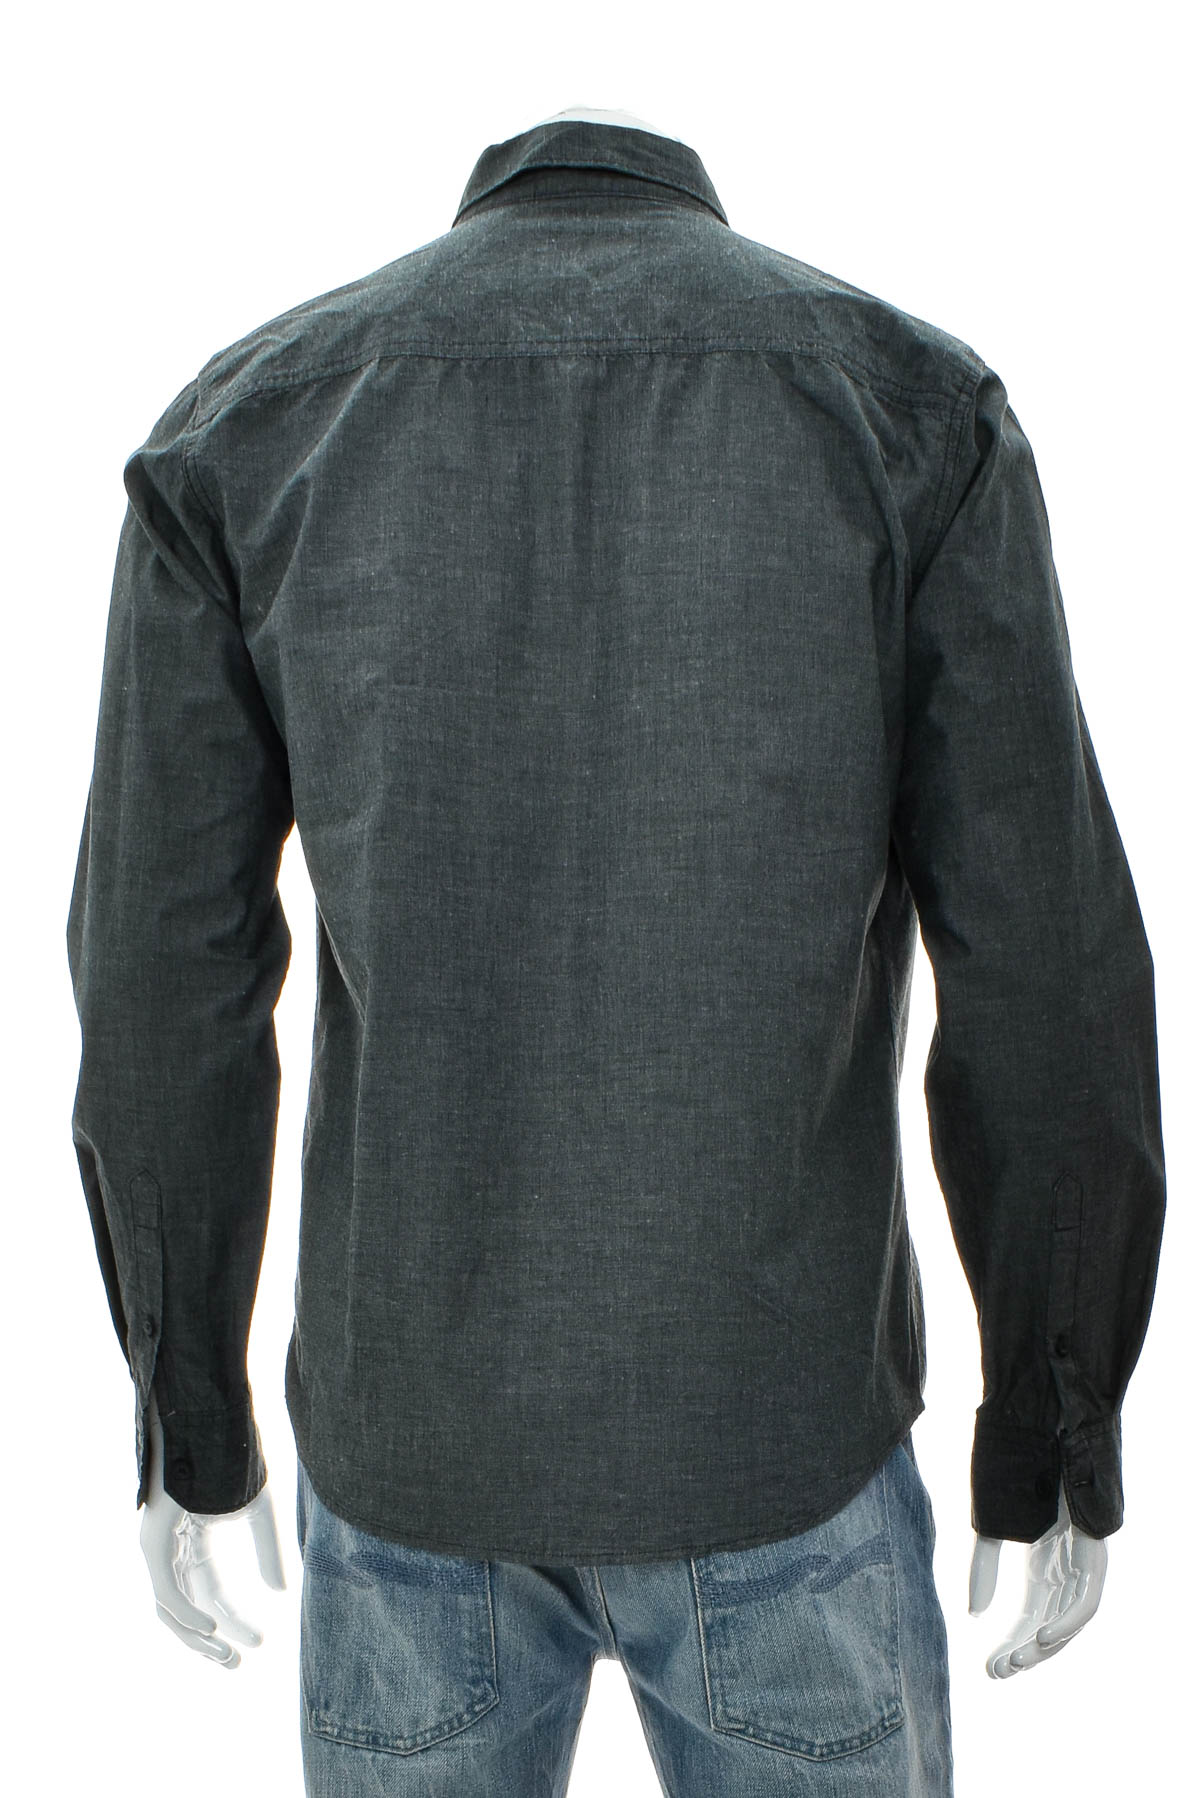 Men's shirt - QUARTERBACK by jbc - 1